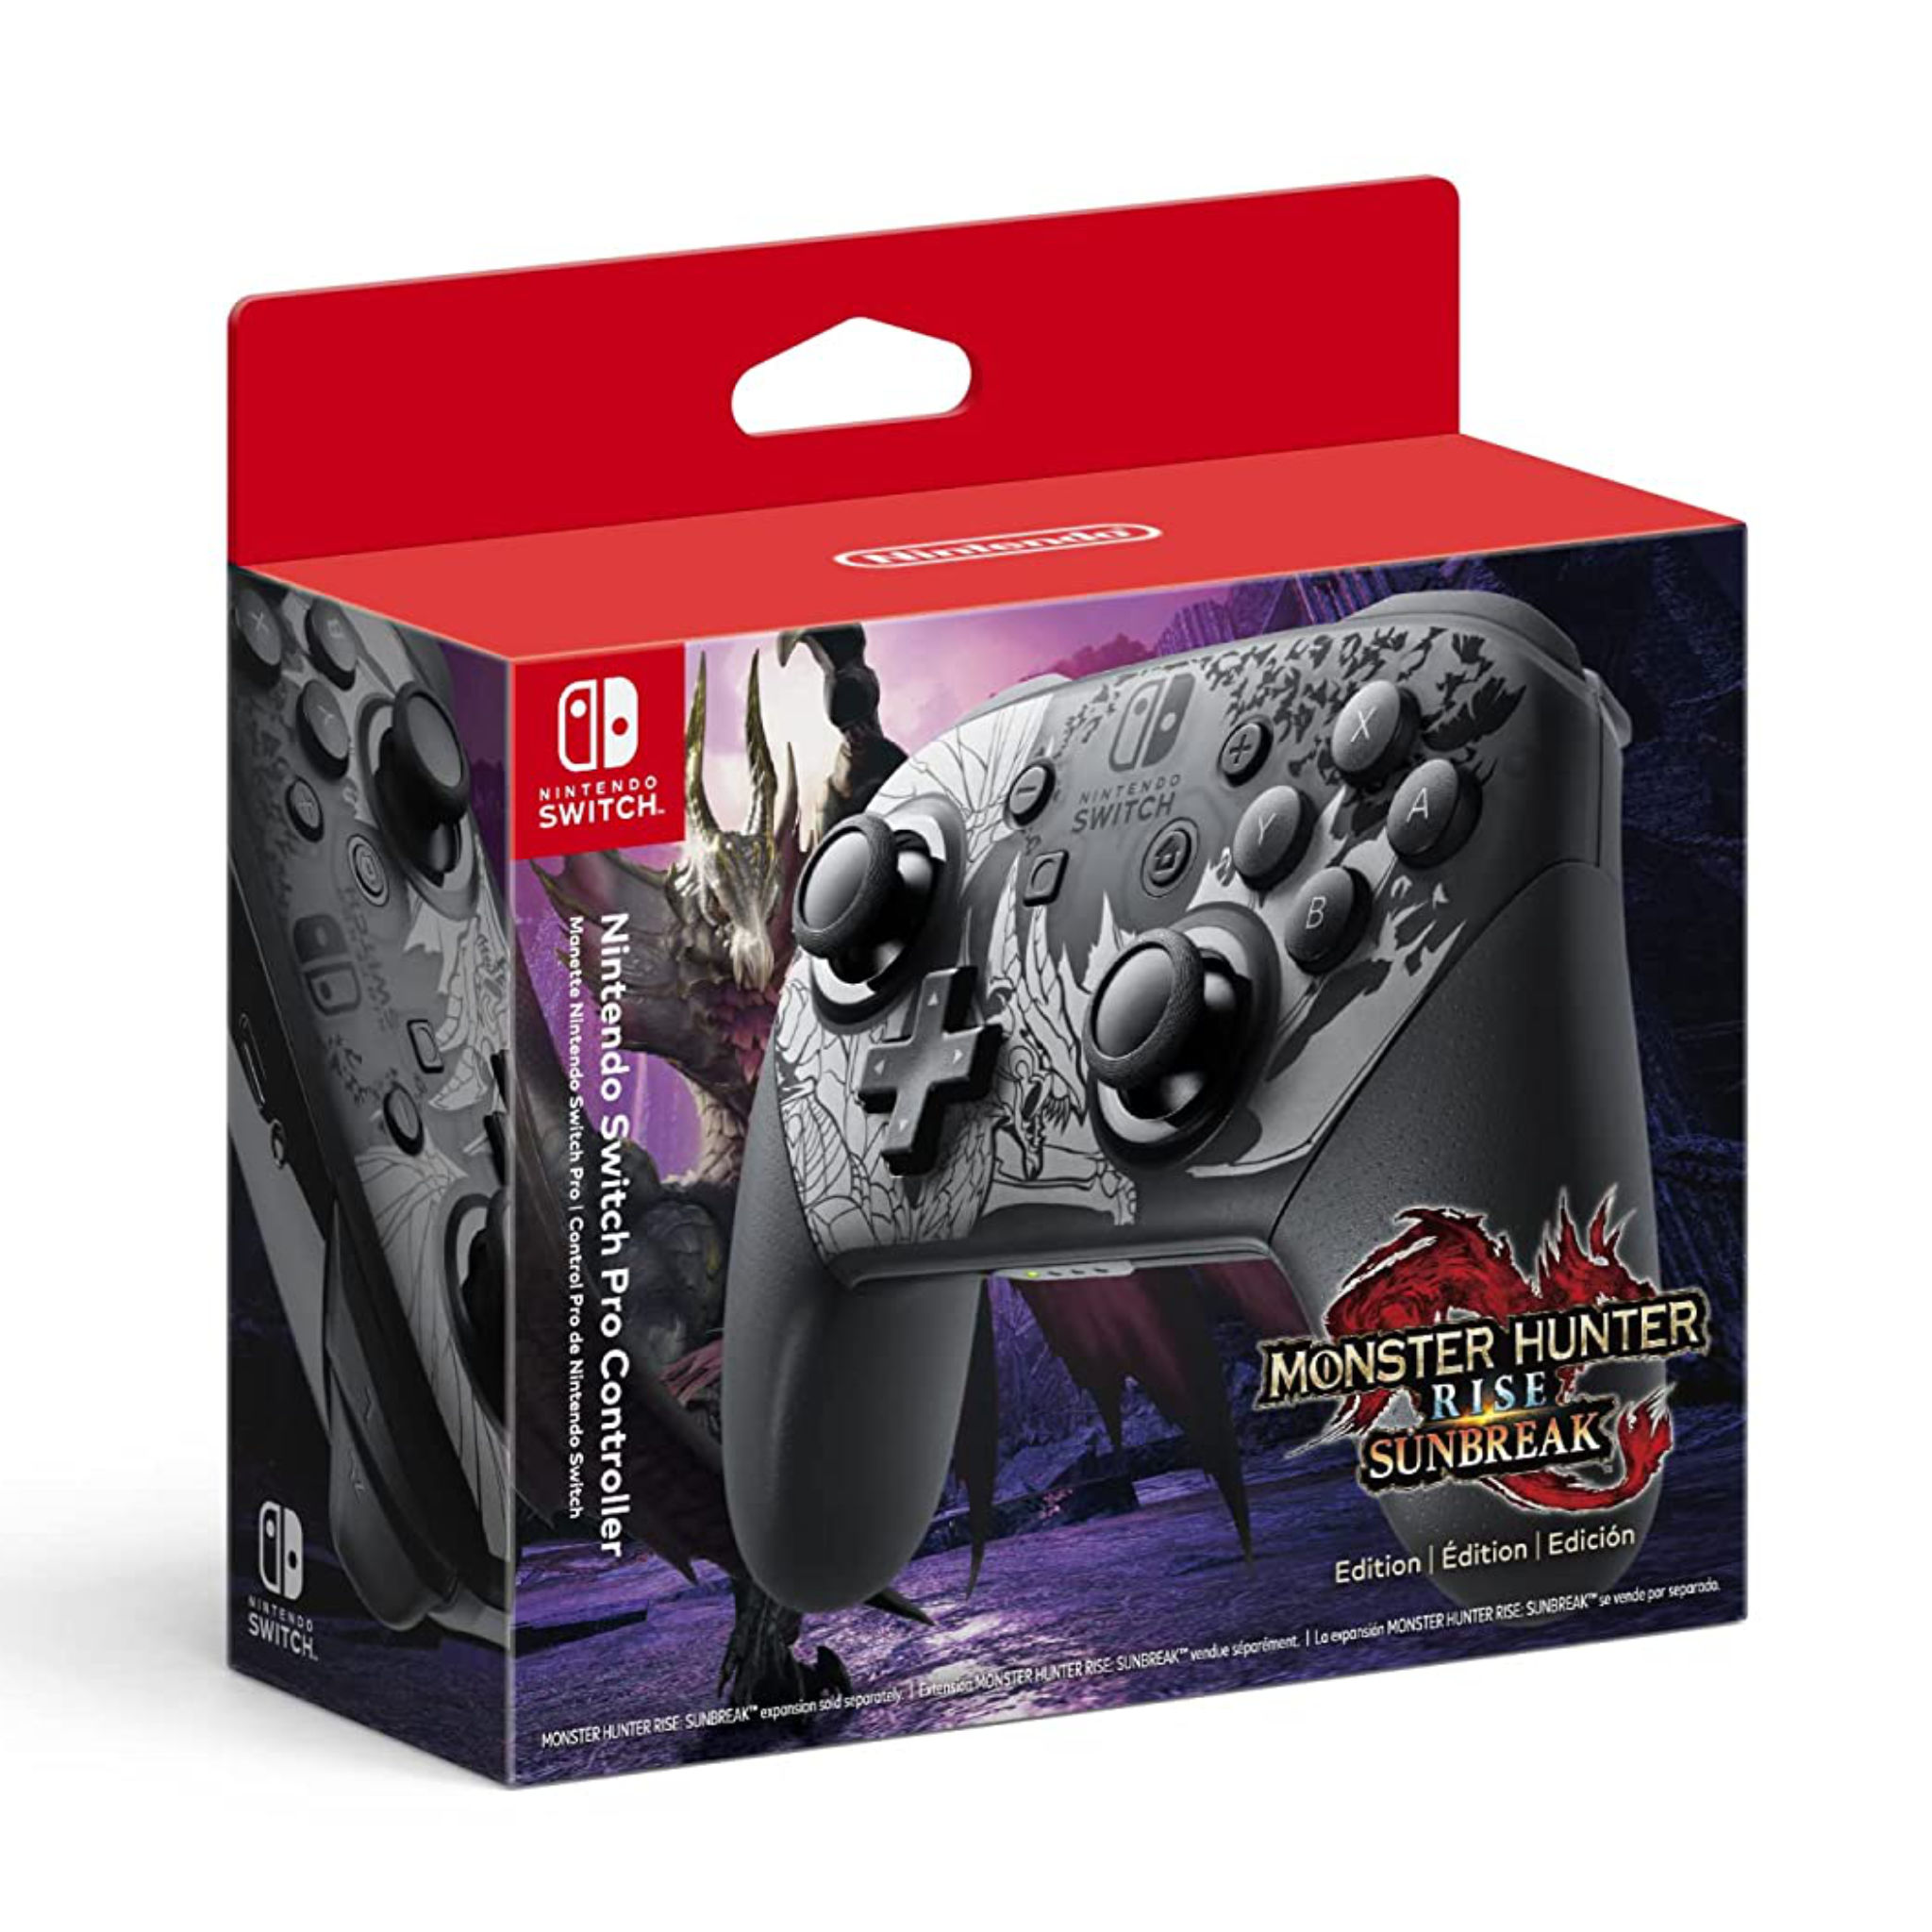 Tay cầm Nintendo Switch Pro Controller - Monster Hunter Rise Sunbreak Edition icamp